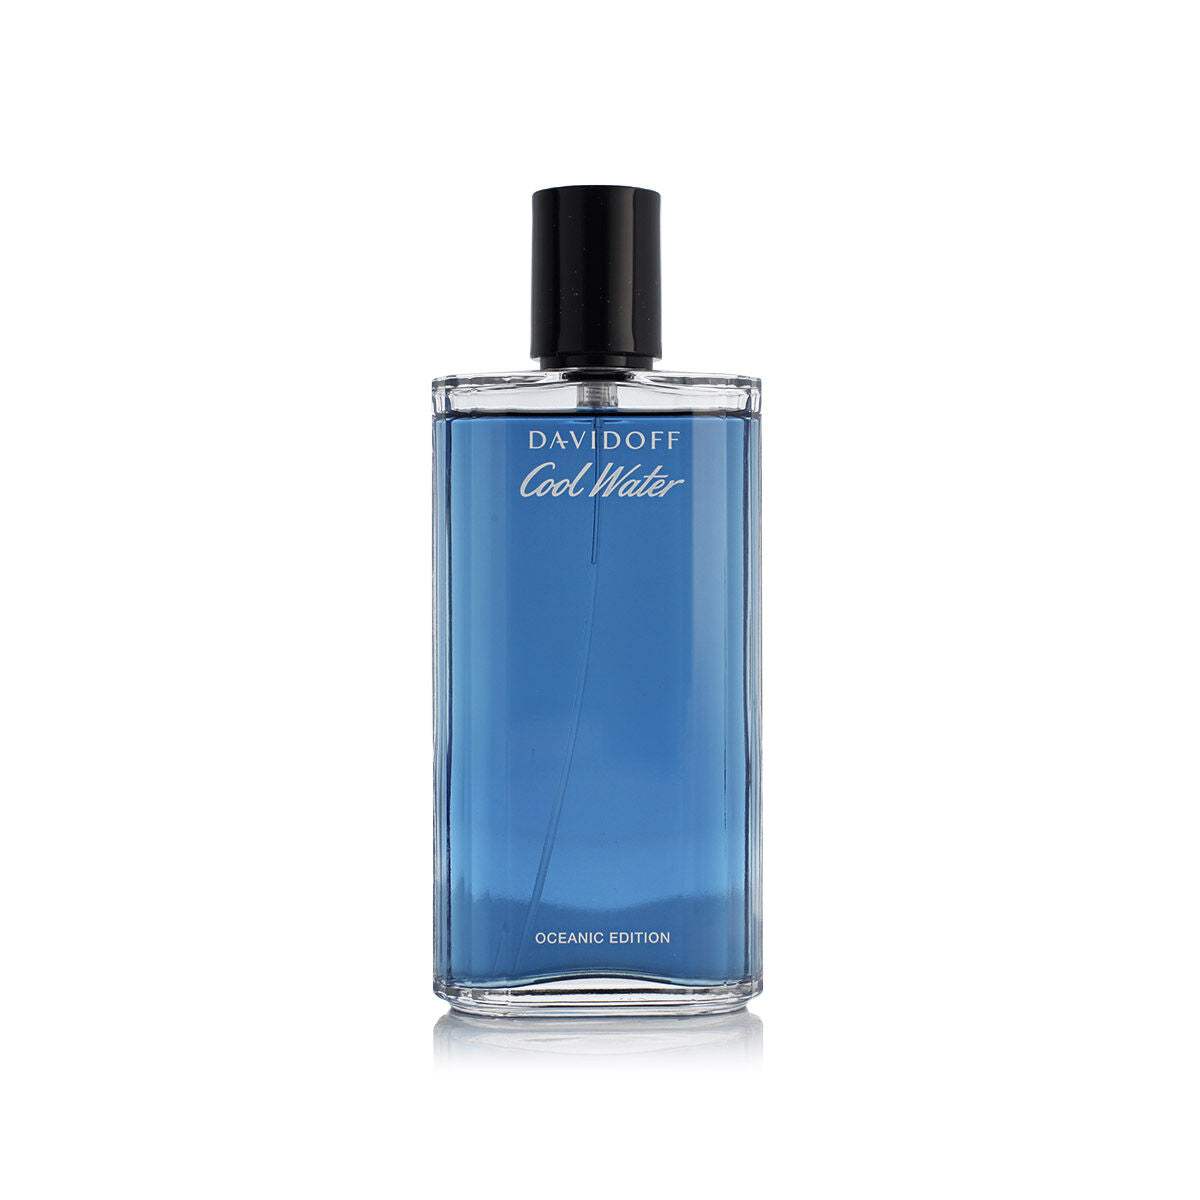 Parfum Homme Davidoff EDT Cool Water Oceanic Edition 125 ml - Davidoff - Jardin D'Eyden - jardindeyden.fr